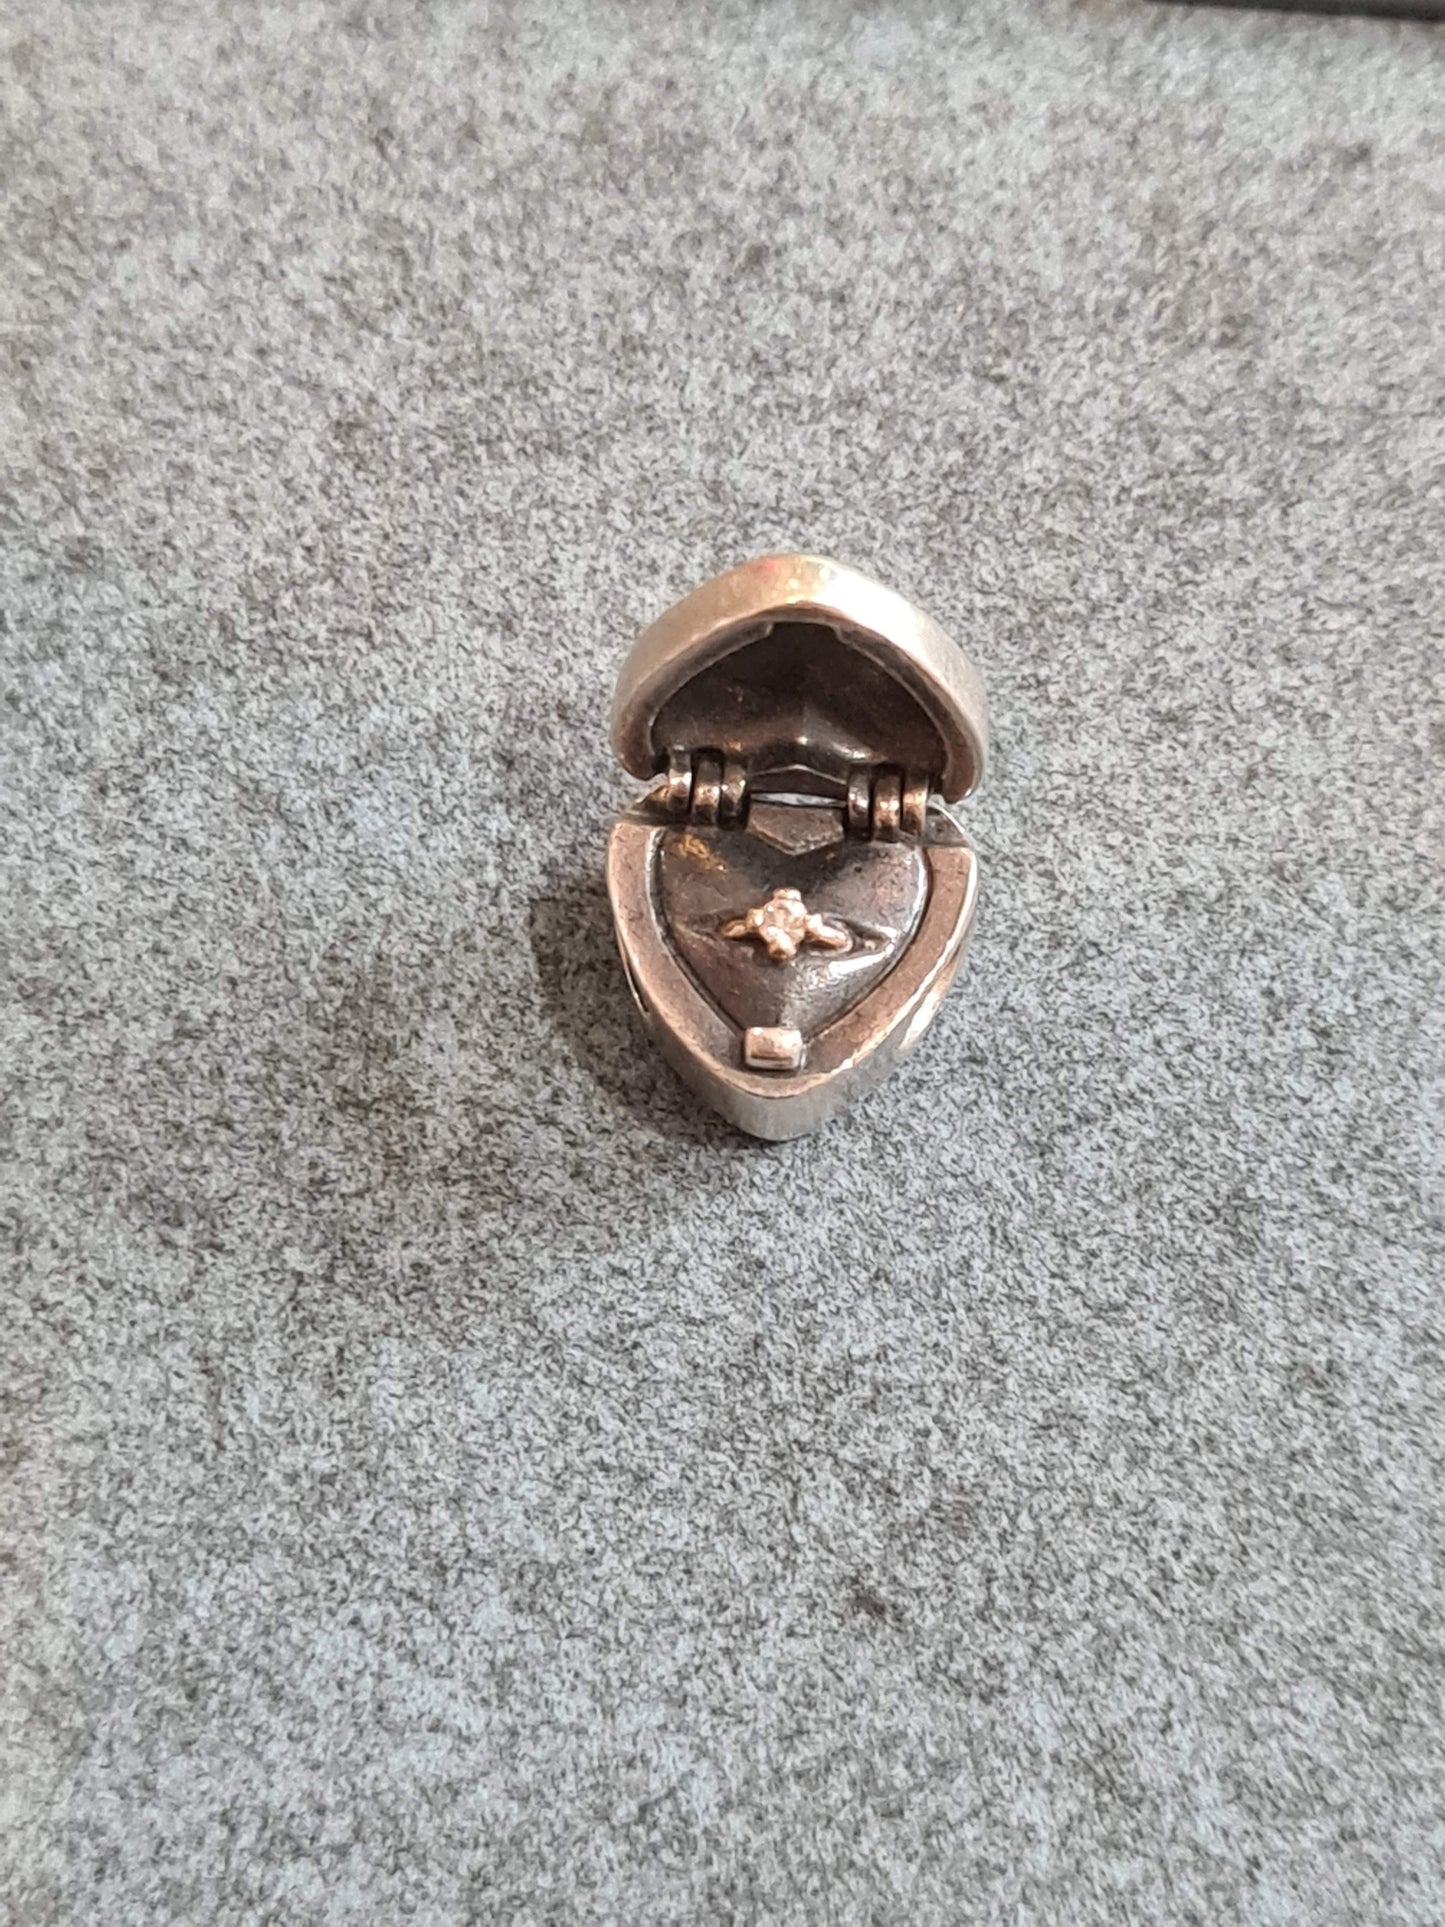 Genuine Pandora Engagement Ring in Box Two Tone Gold Diamond